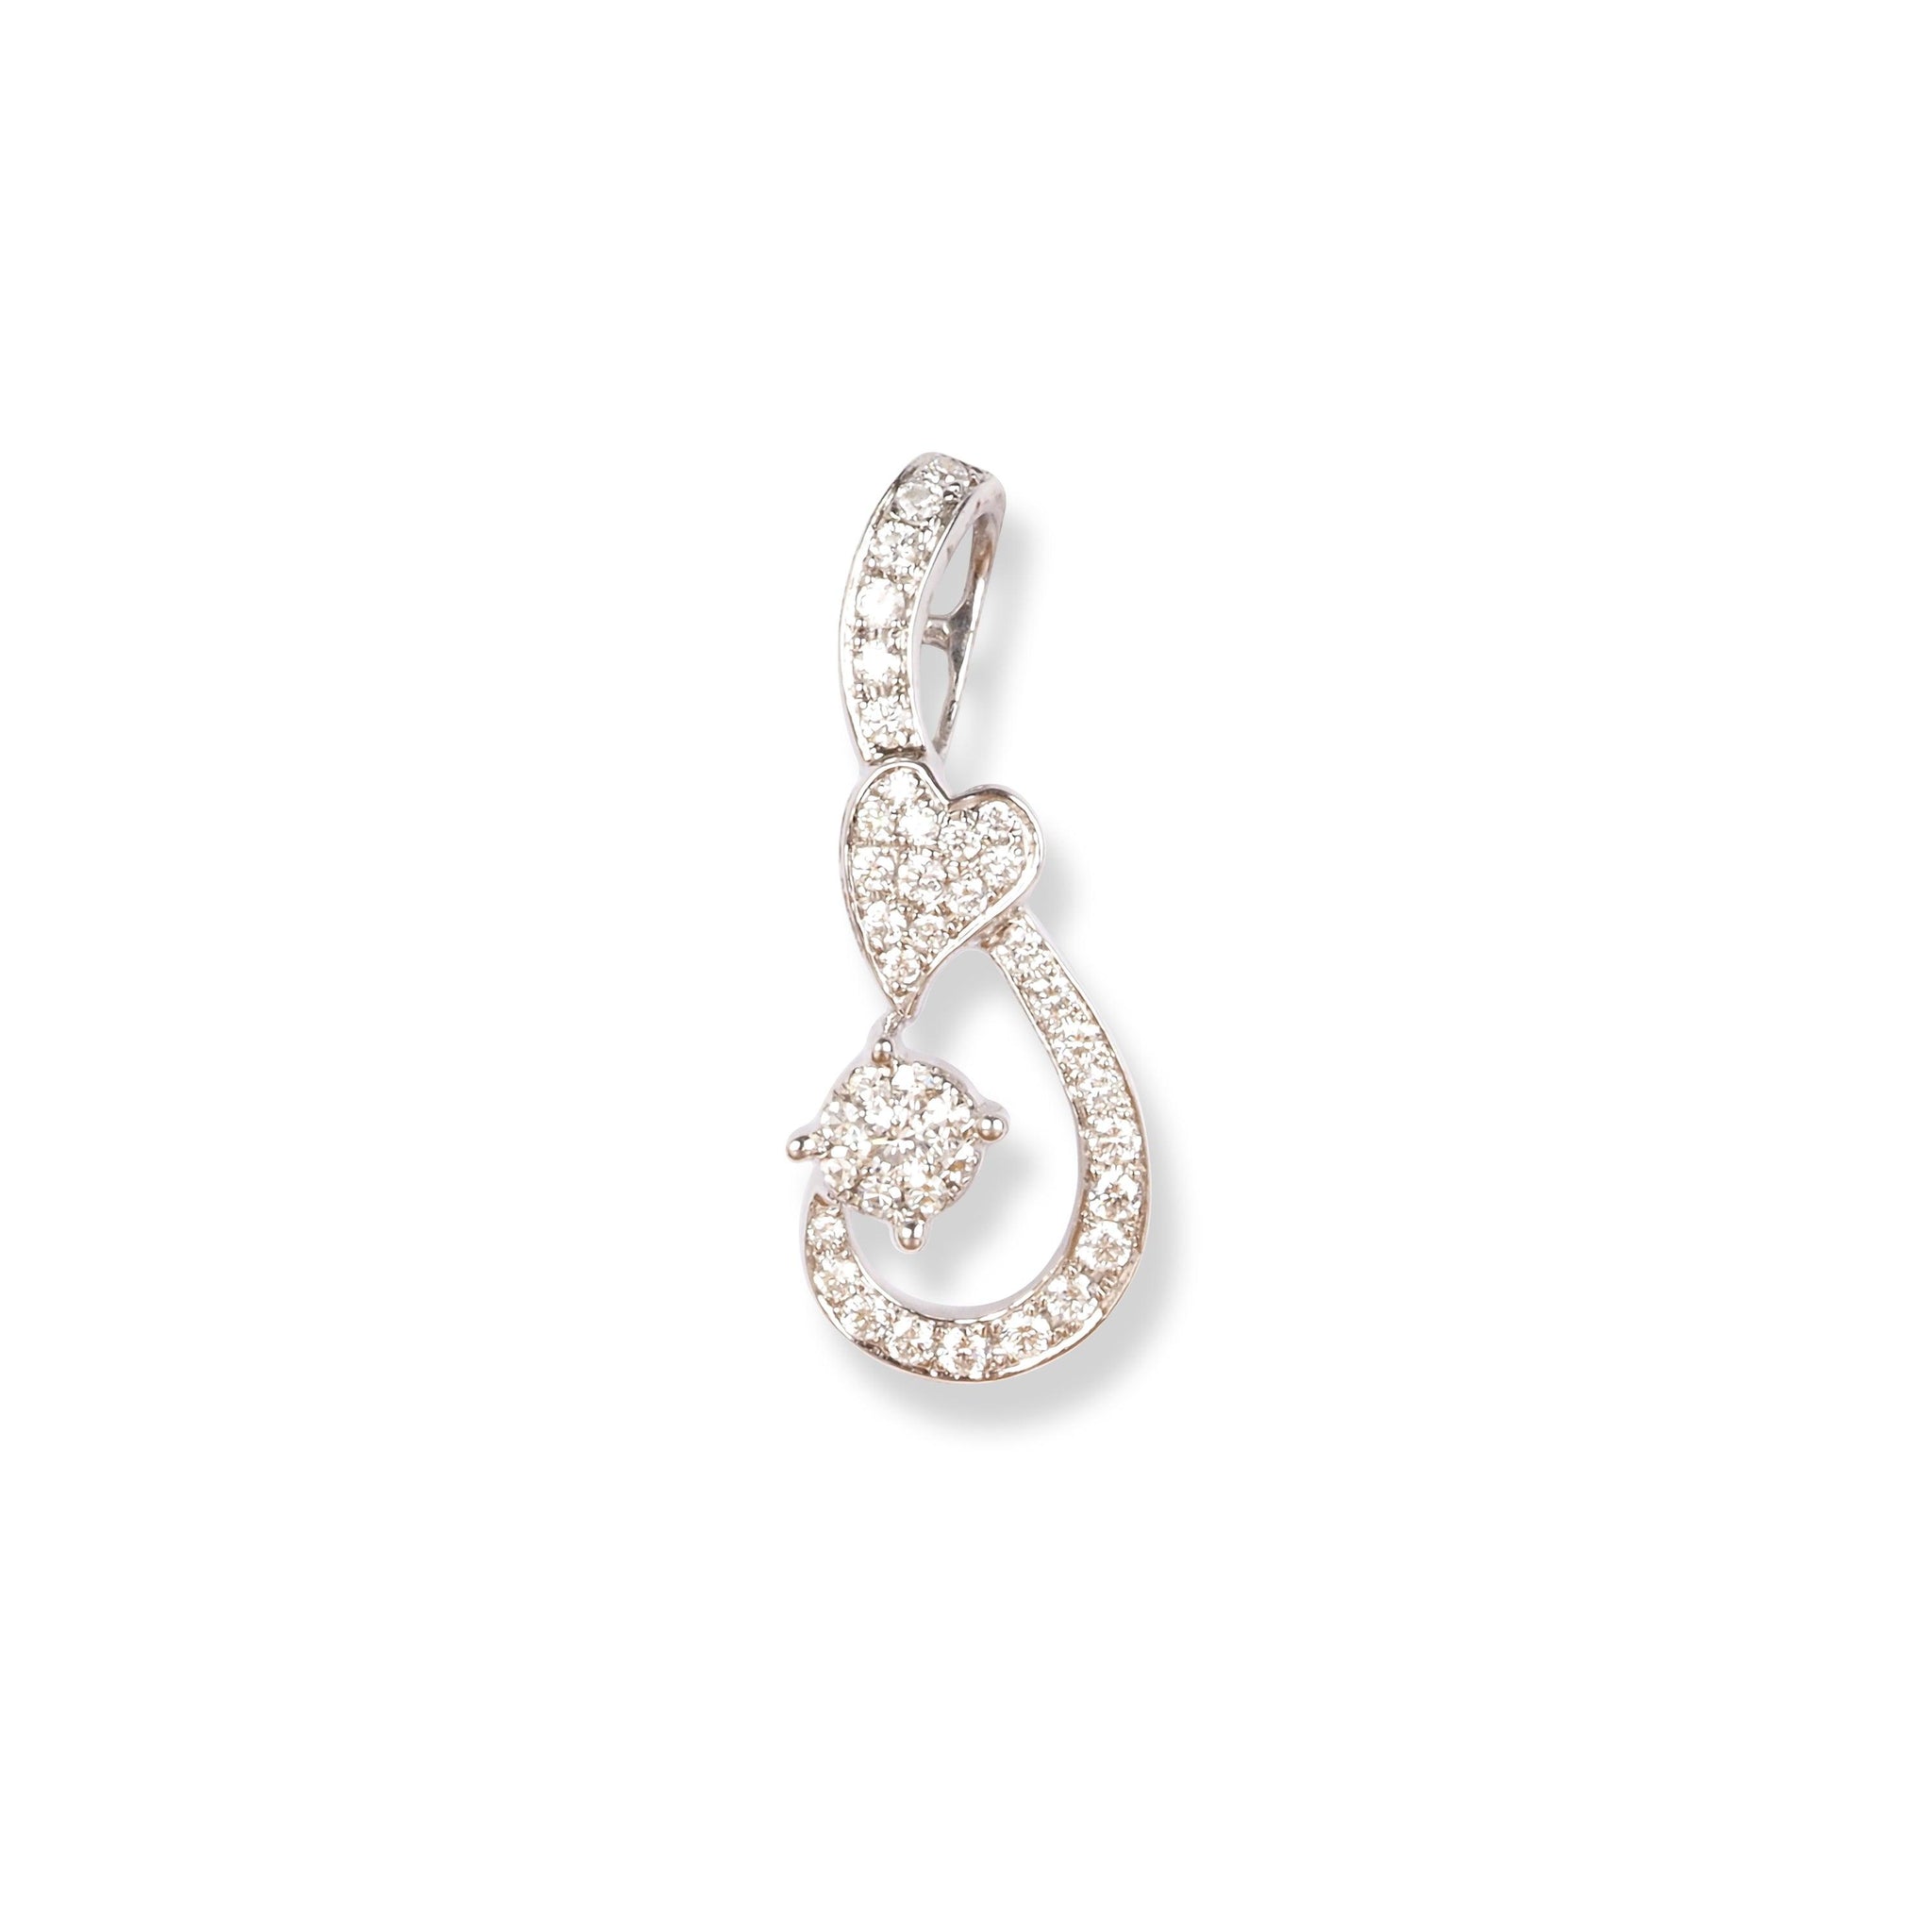 18ct White Gold Diamond Pendant with Heart Design MCS1668